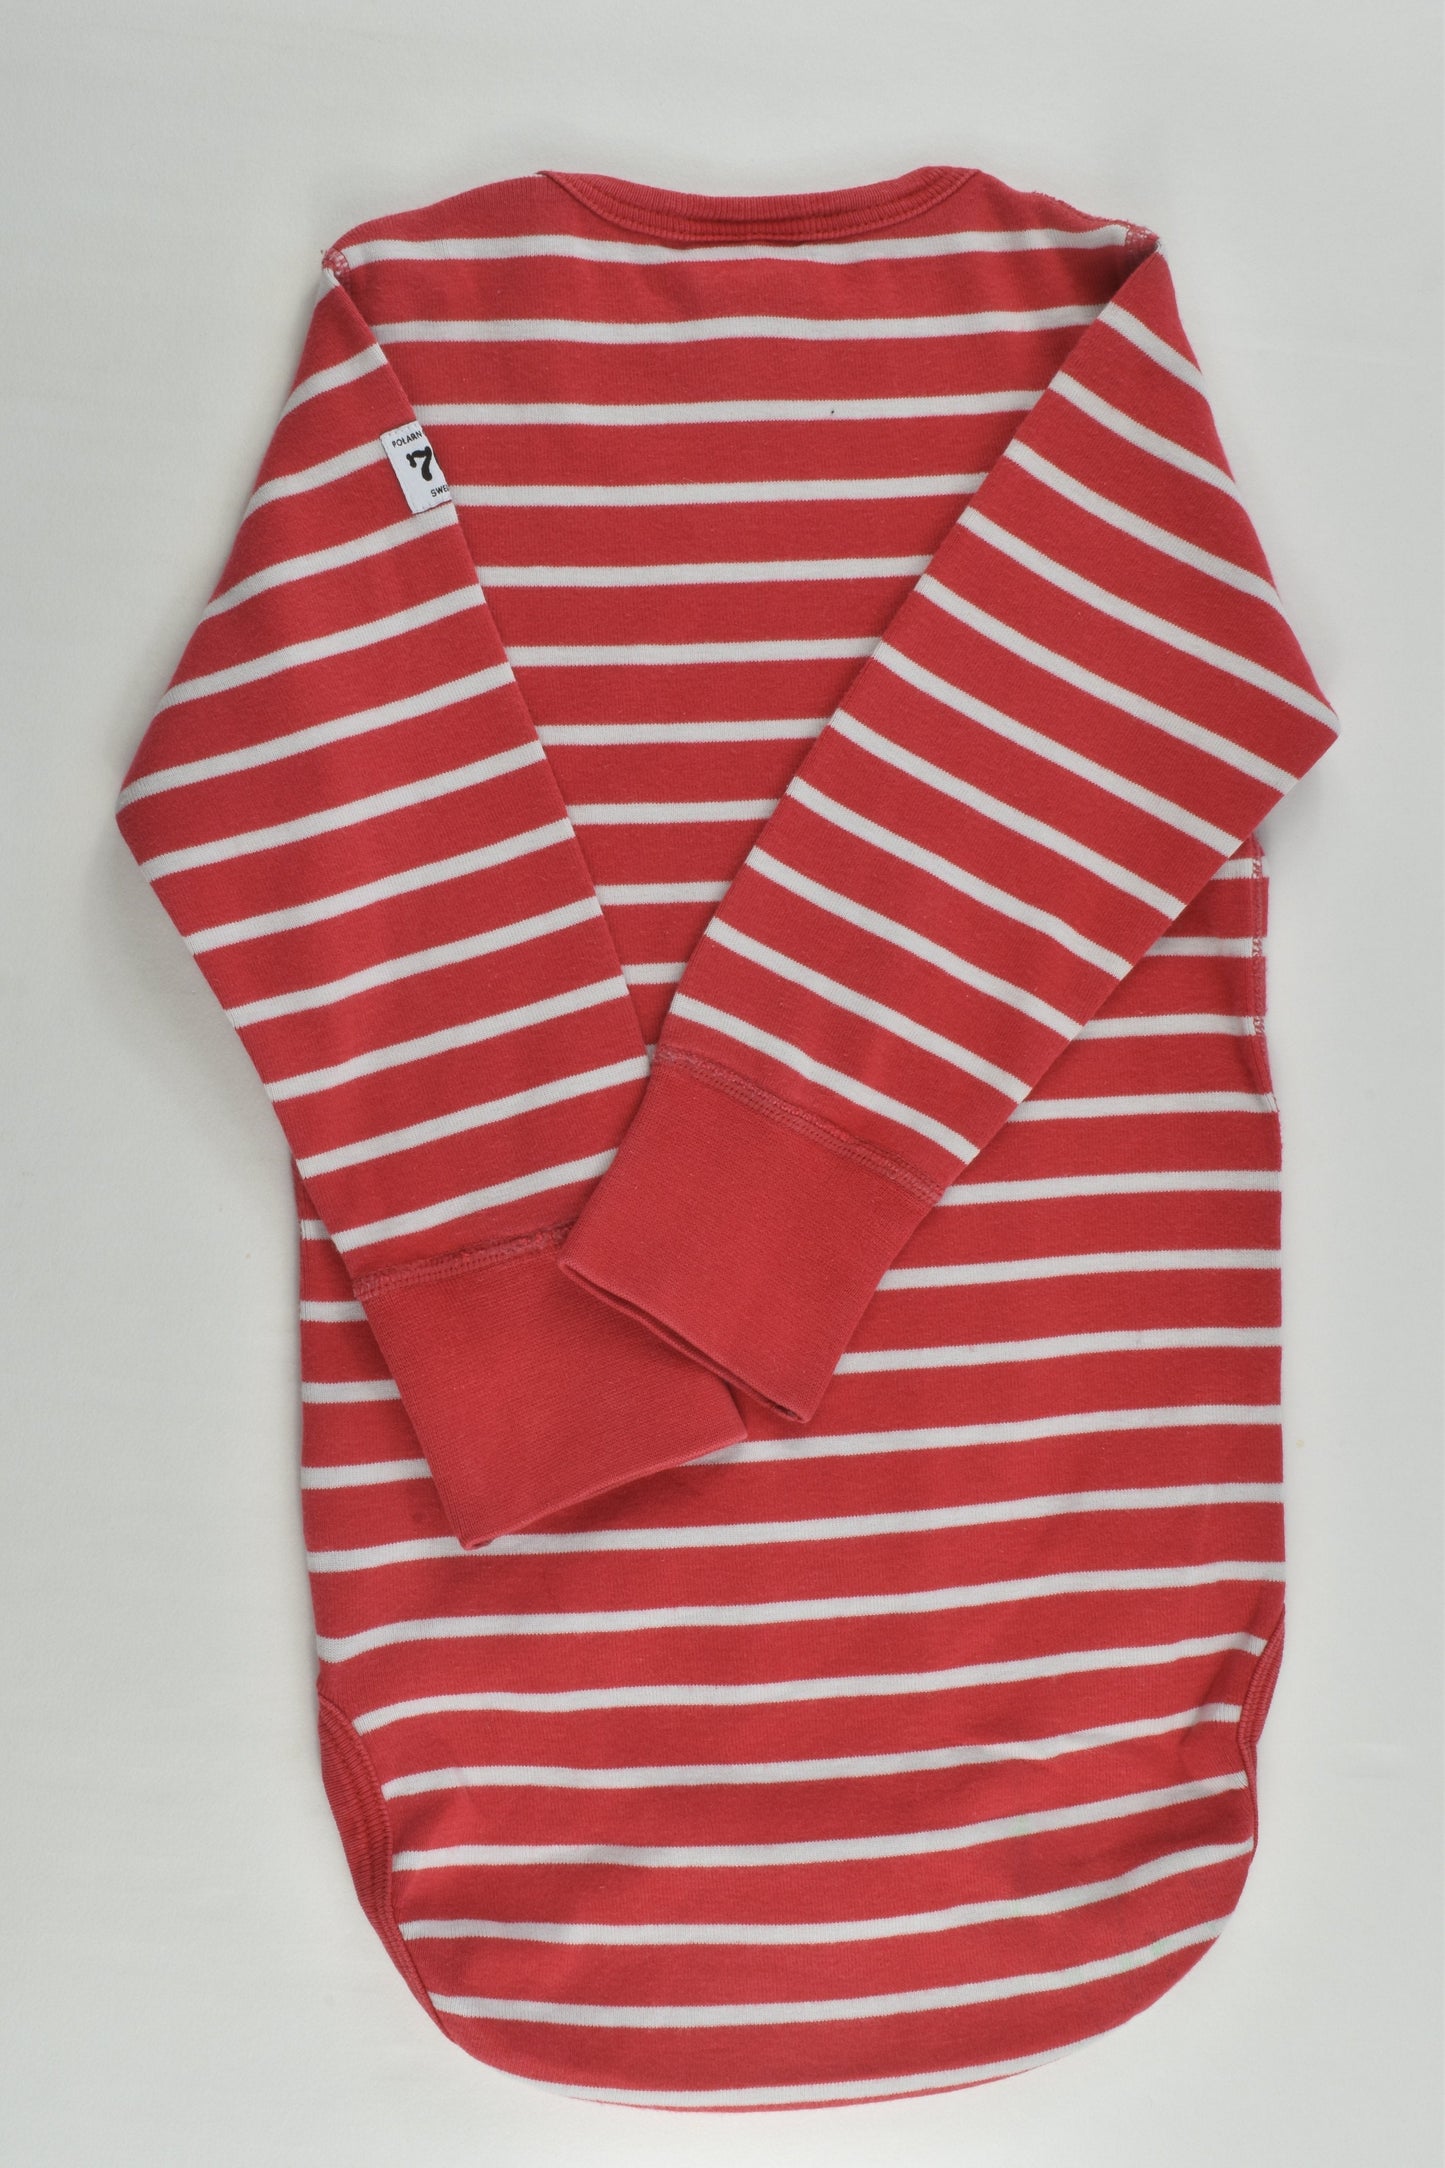 Polarn O. Pyret Size 0 (80 cm) Striped Bodysuit